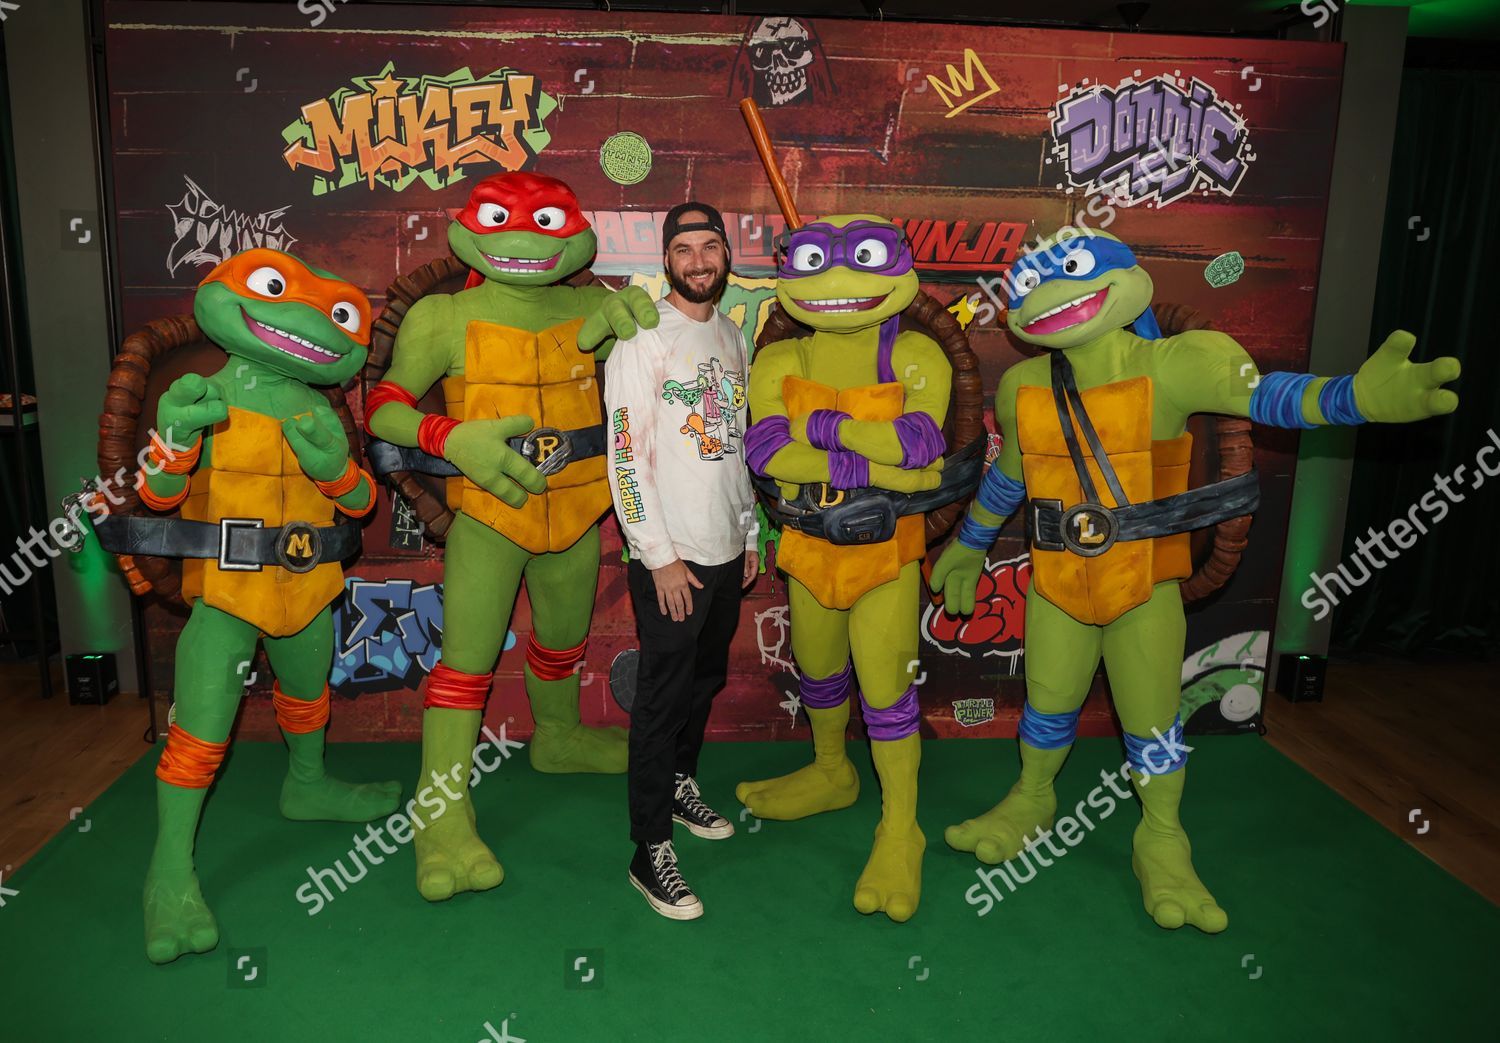 Teenage Mutant Ninja Turtles models raise money for NHS charities - BBC News